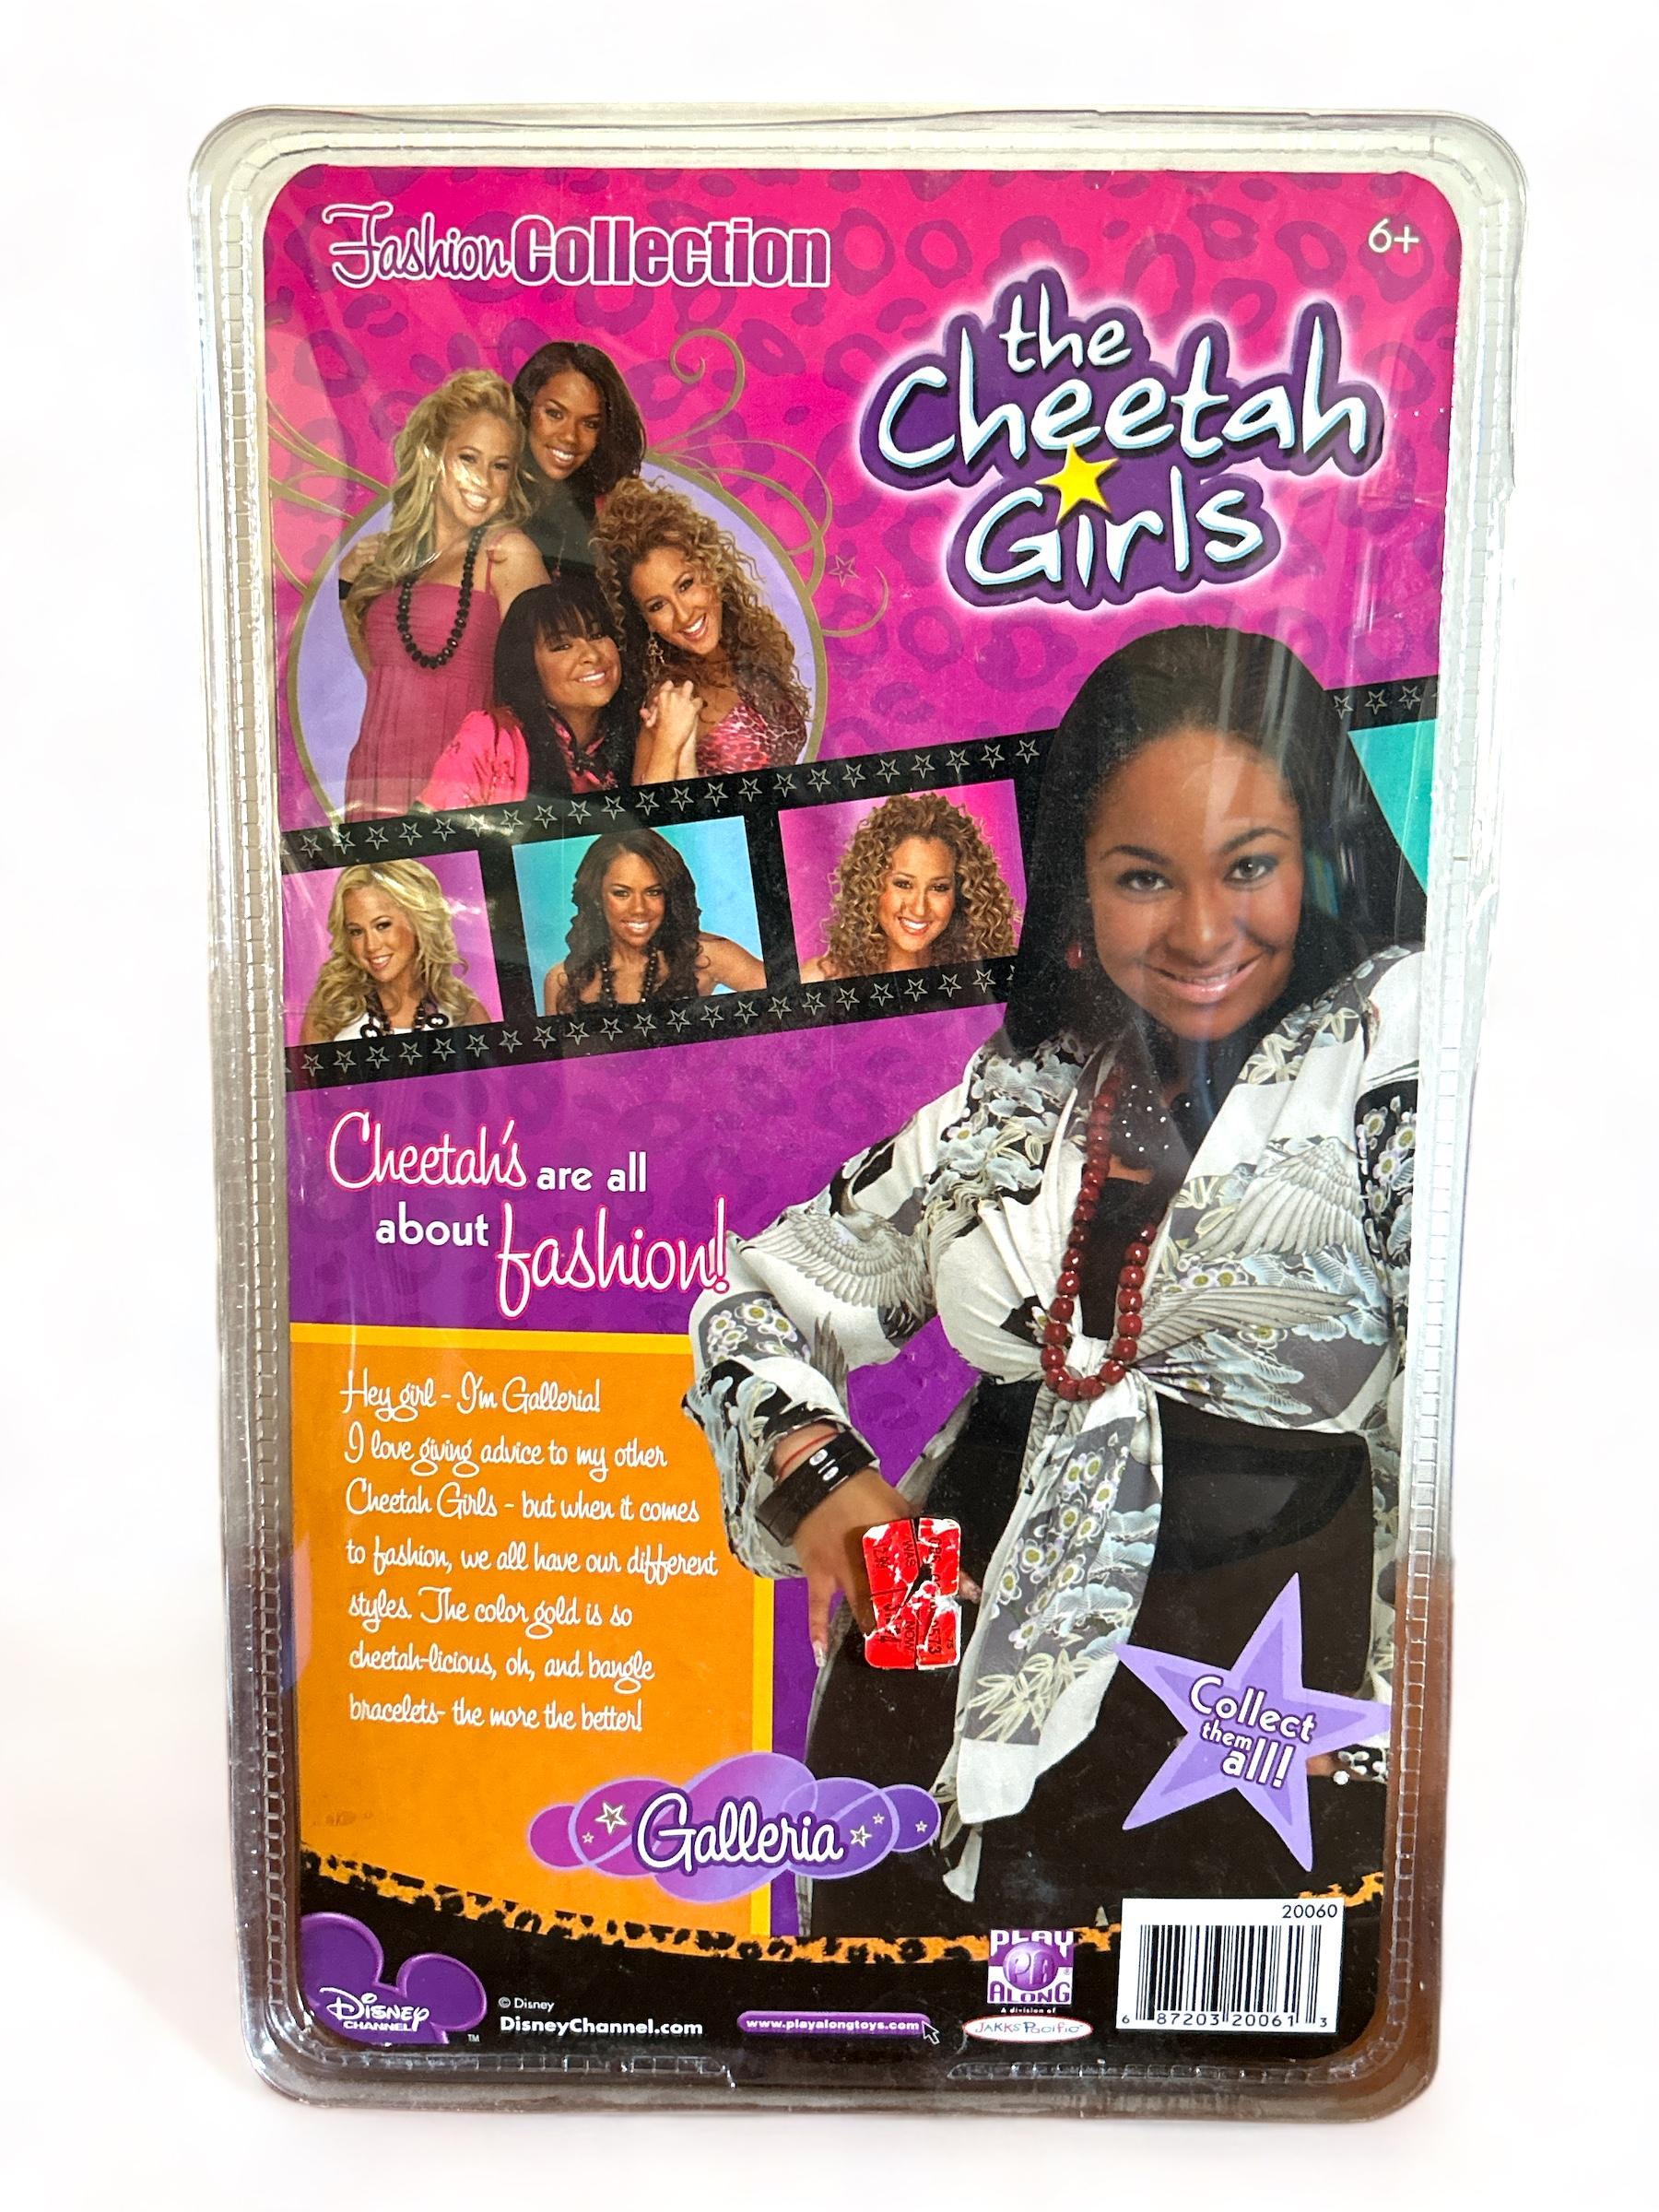 The Cheetah Girls - 'Galleria'